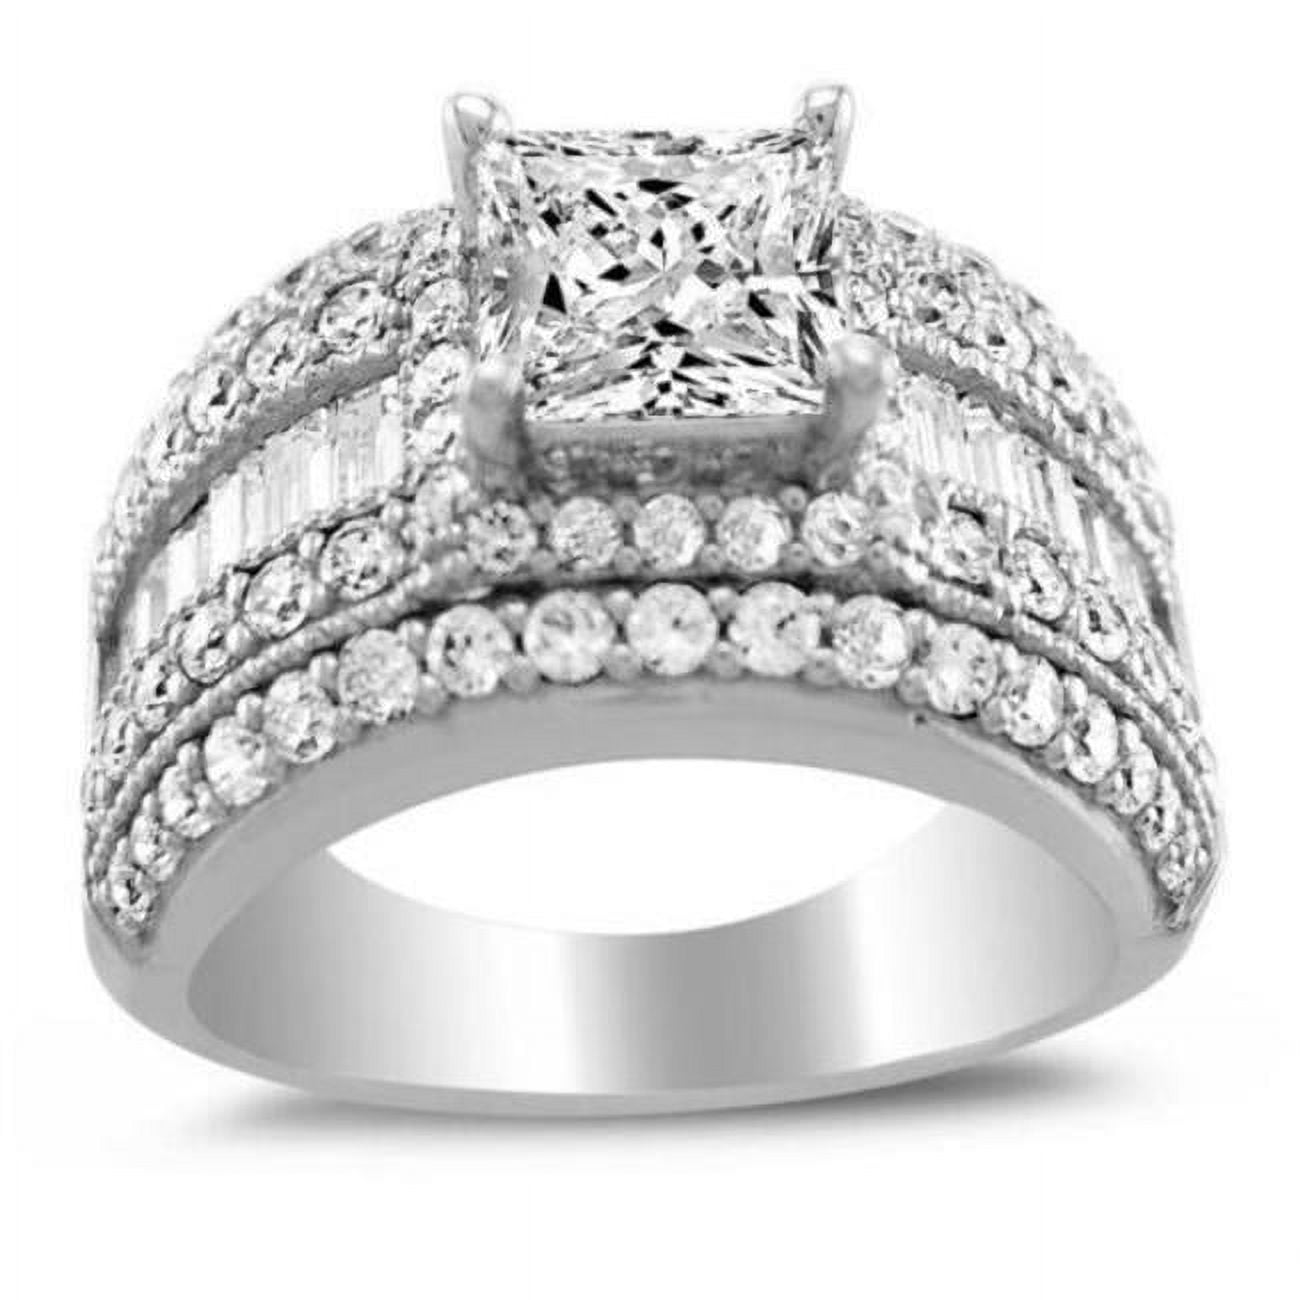 OS0065-RG-sz5 14K White Gold 2.5CT TGW Princess-cut Diamonette Engagement Ring, Size 5 -  Precious Stars, OS0065-RG_sz5